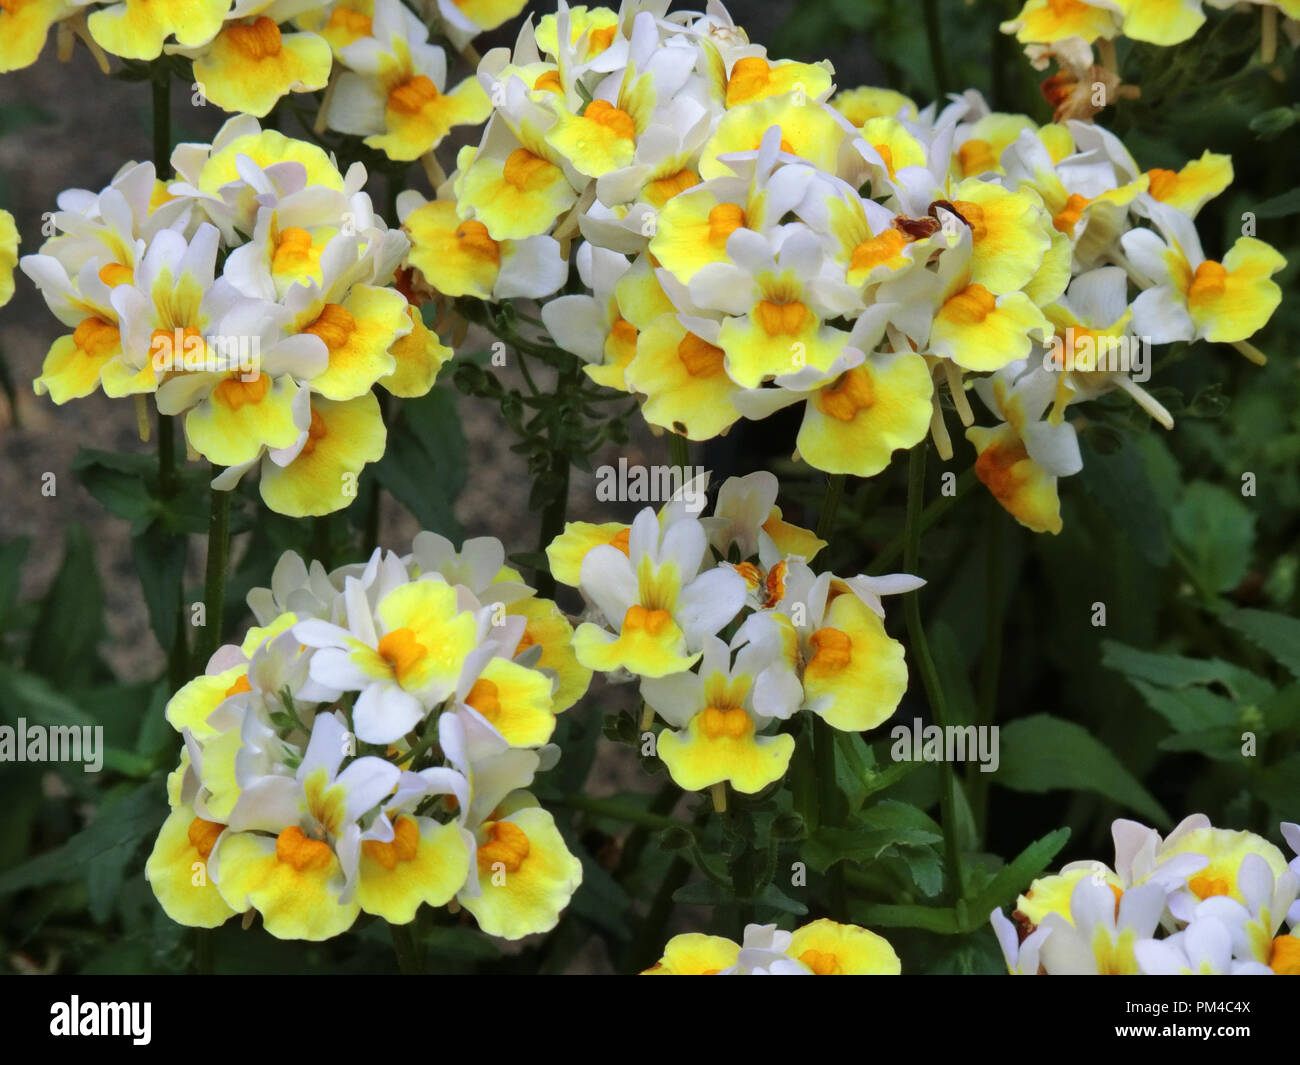 Nemesia Sunpeddle Yellow and White Hybrid Bedding Plant Stock Photo